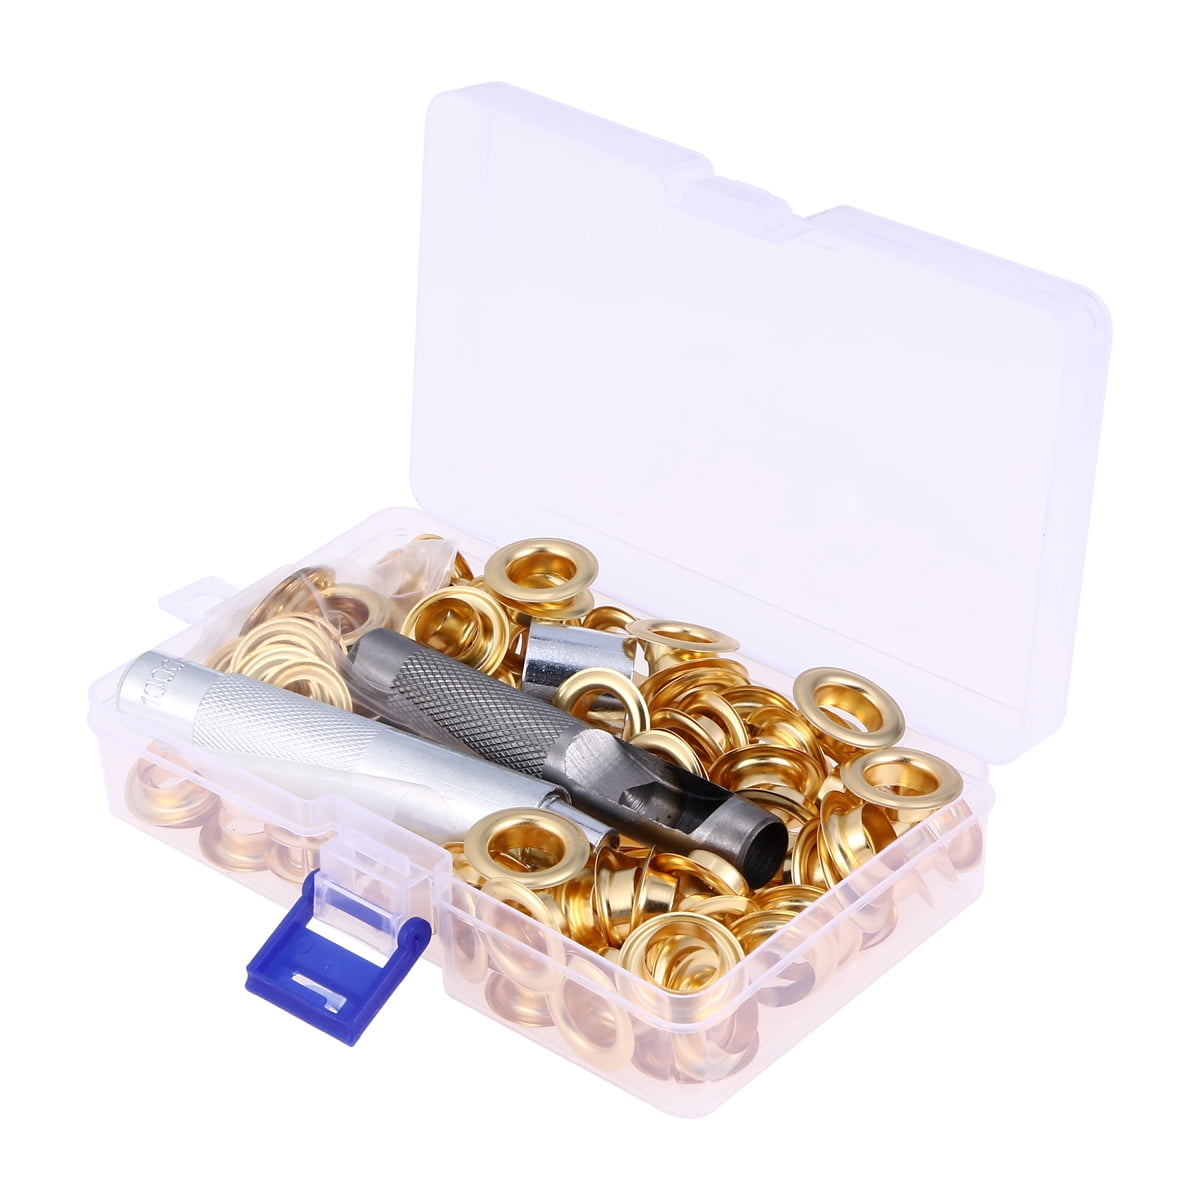 3pc Soild Brass Punch Set: Prosperity Tool, Inc.